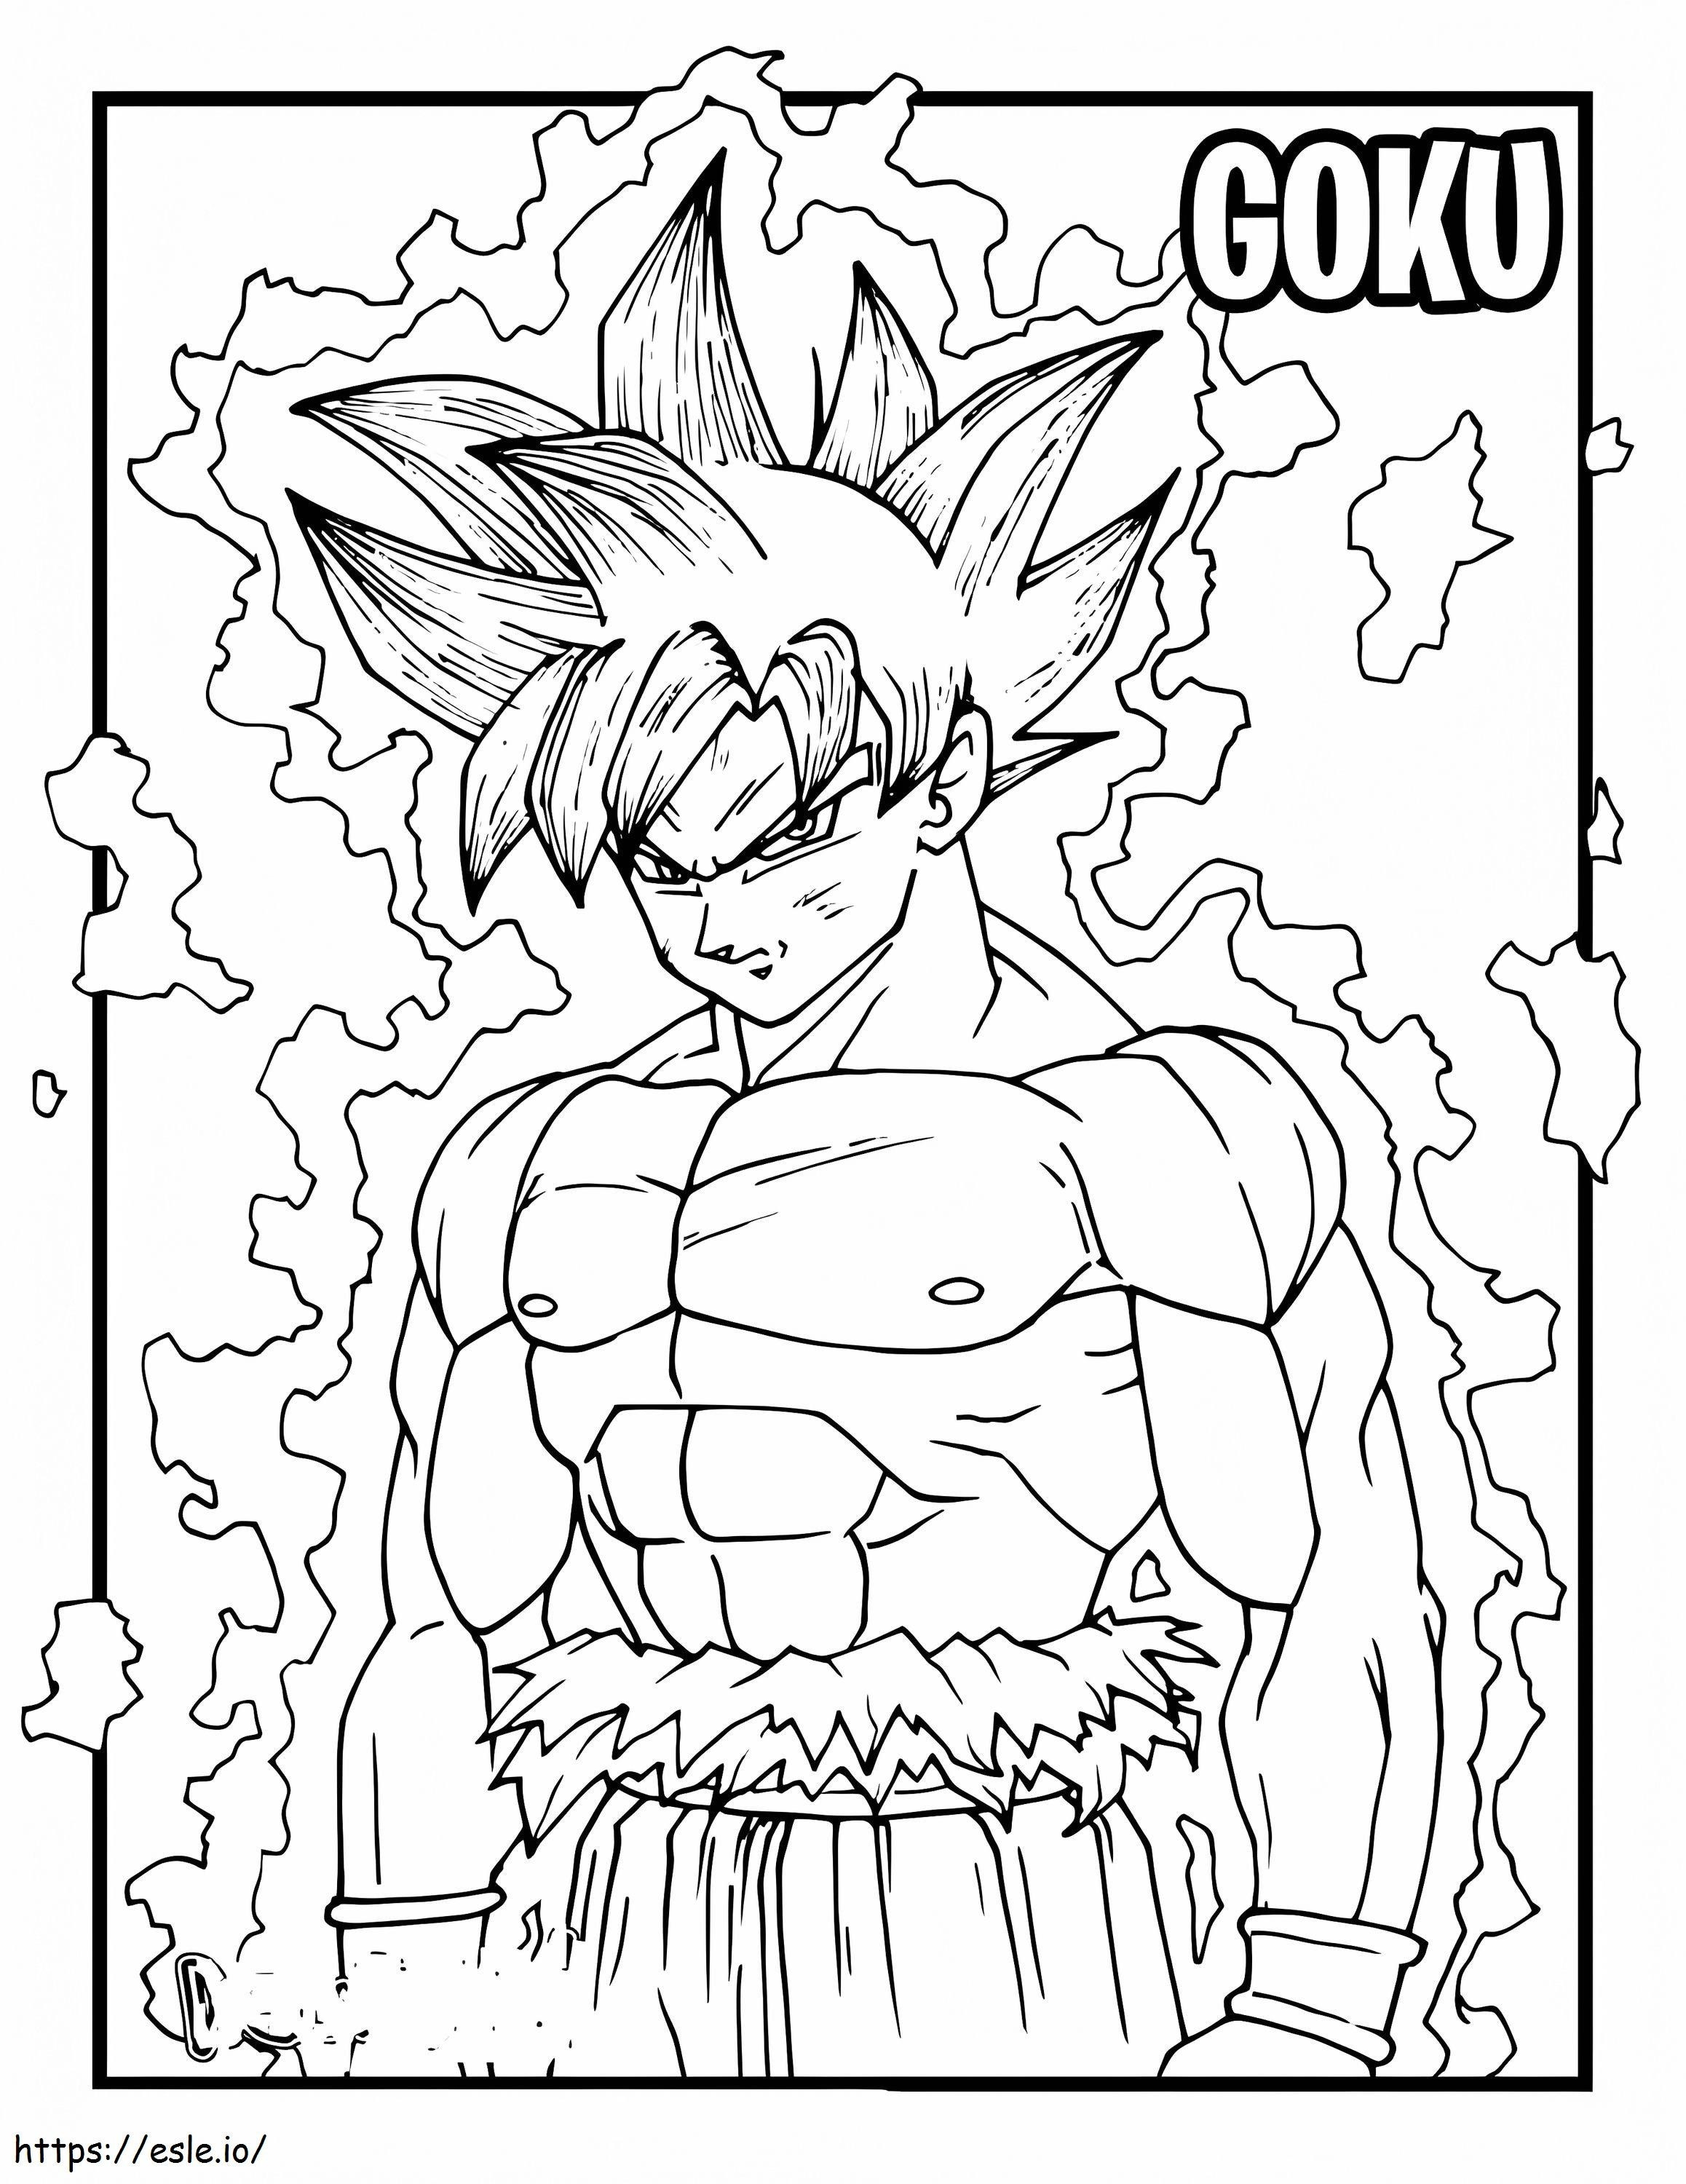 Son Goku'nun Gücü boyama